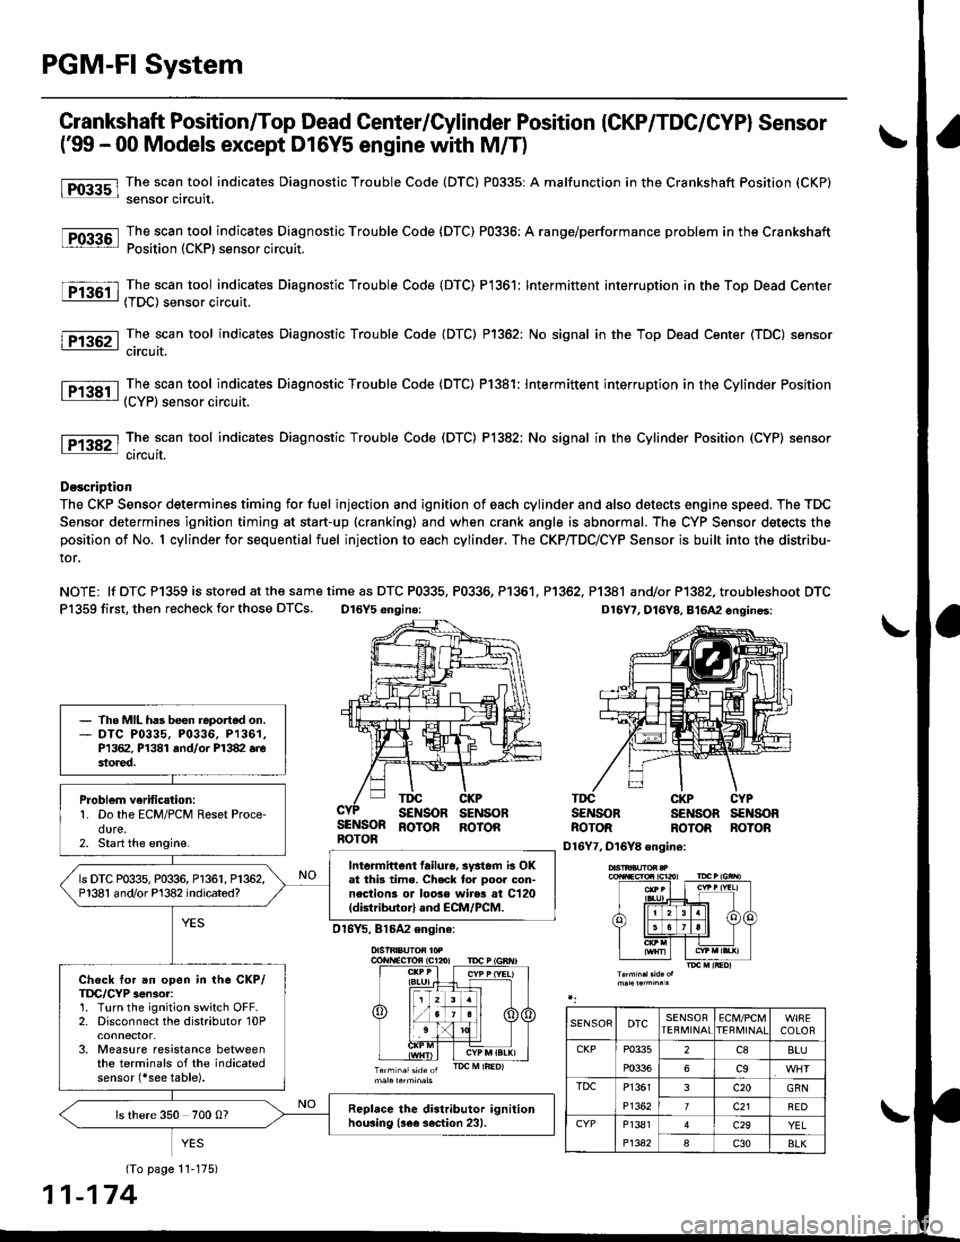 HONDA CIVIC 1998 6.G Service Manual PGM-FI System
l-Fos3sl
tFos36l
tF1361 l
Fr362-1
tF13sil
Crankshaft Position/Top Dead Center/Cylinder Position (CKP/TDC/CYPI Sensor
f99 - 00 Models except D16Y5 engine with M/T)
The scan tool indicates